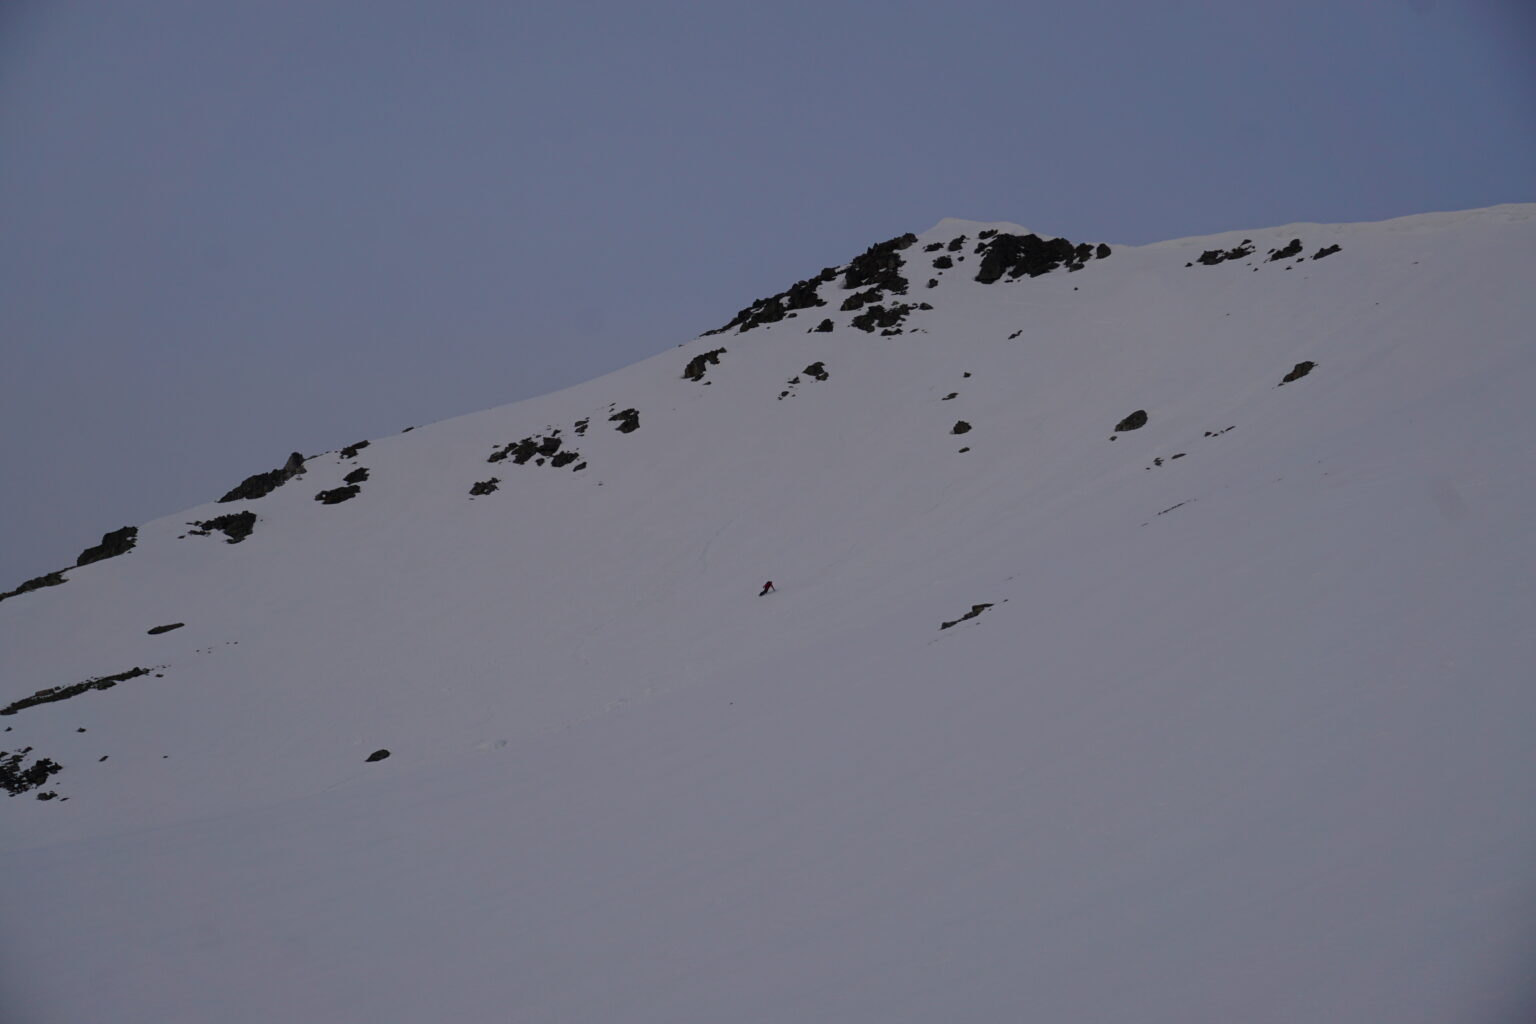 Snowboarding the north bowl of Veidalsfjellet